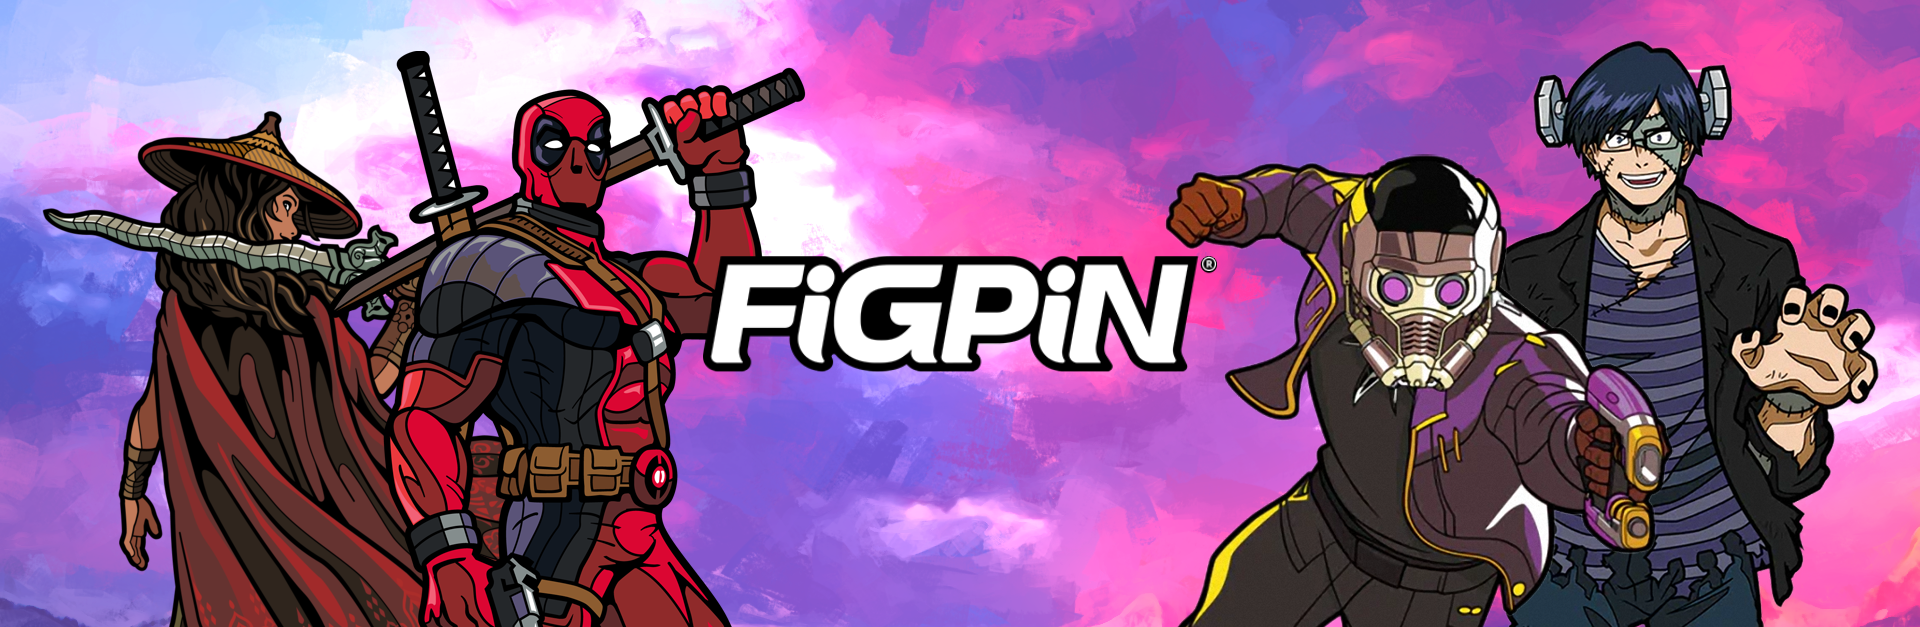 buy FiGPiN enamel character pins